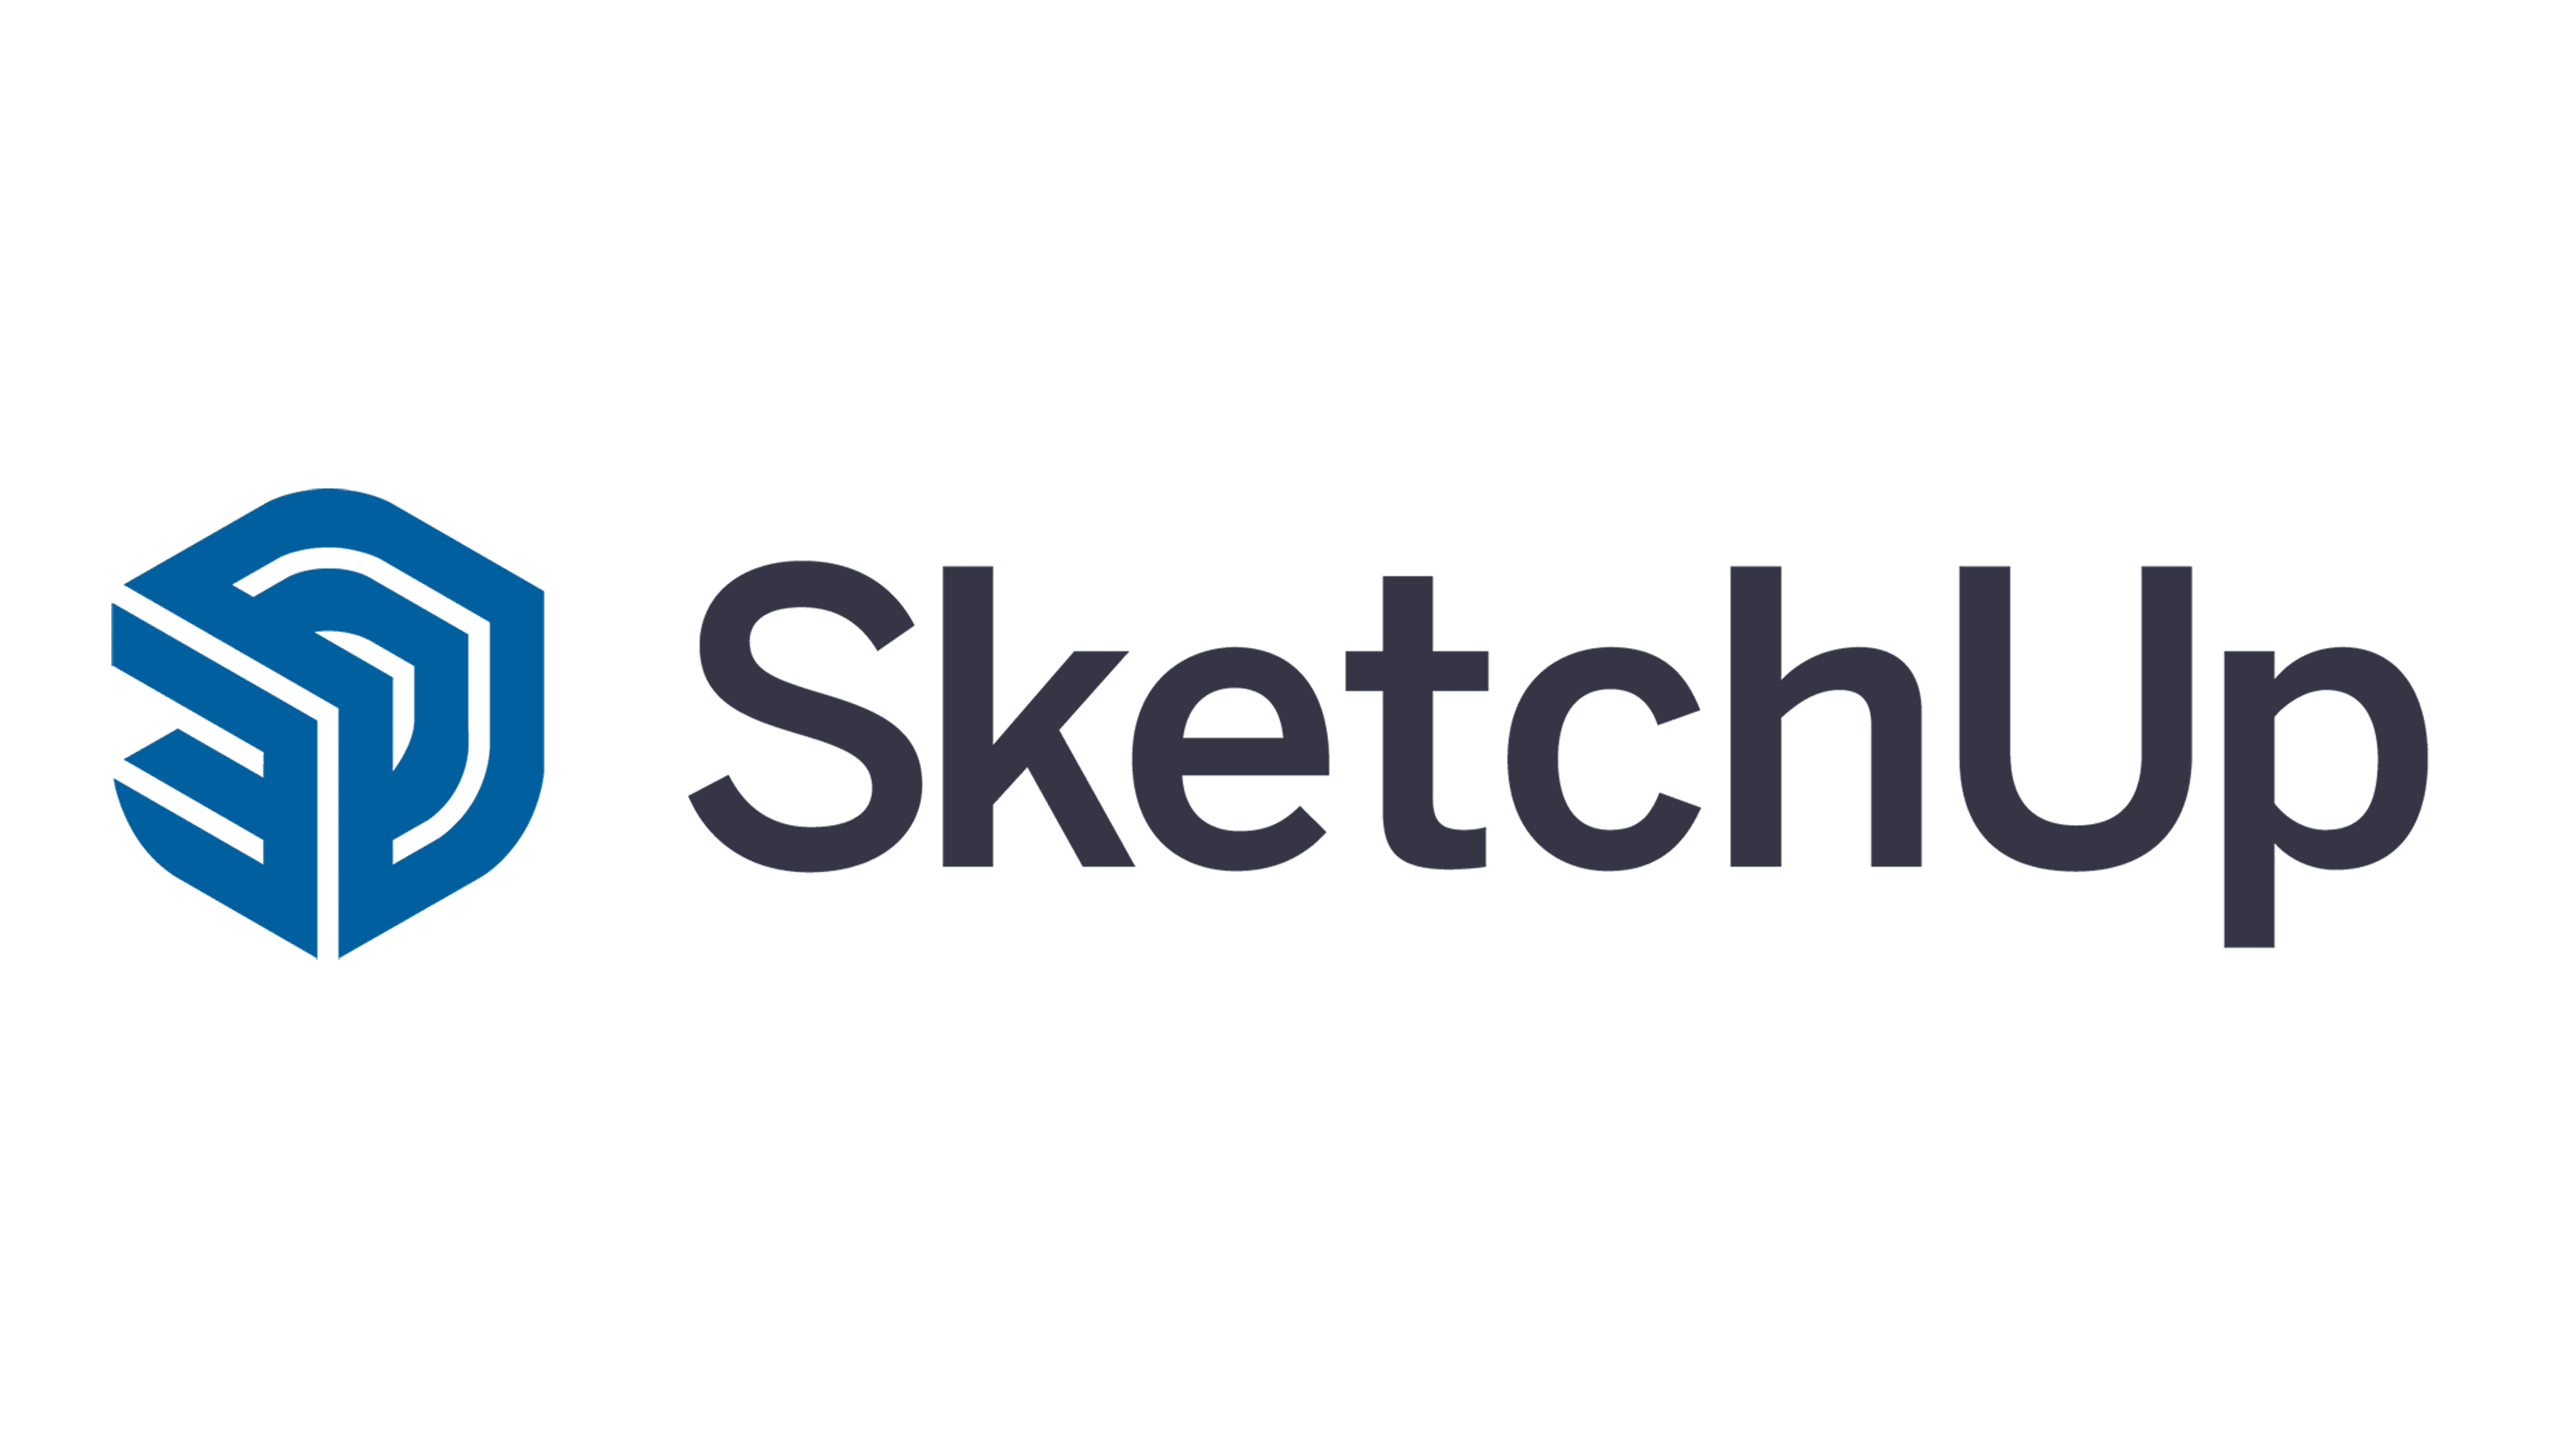 Network SketchUp Pro 2020